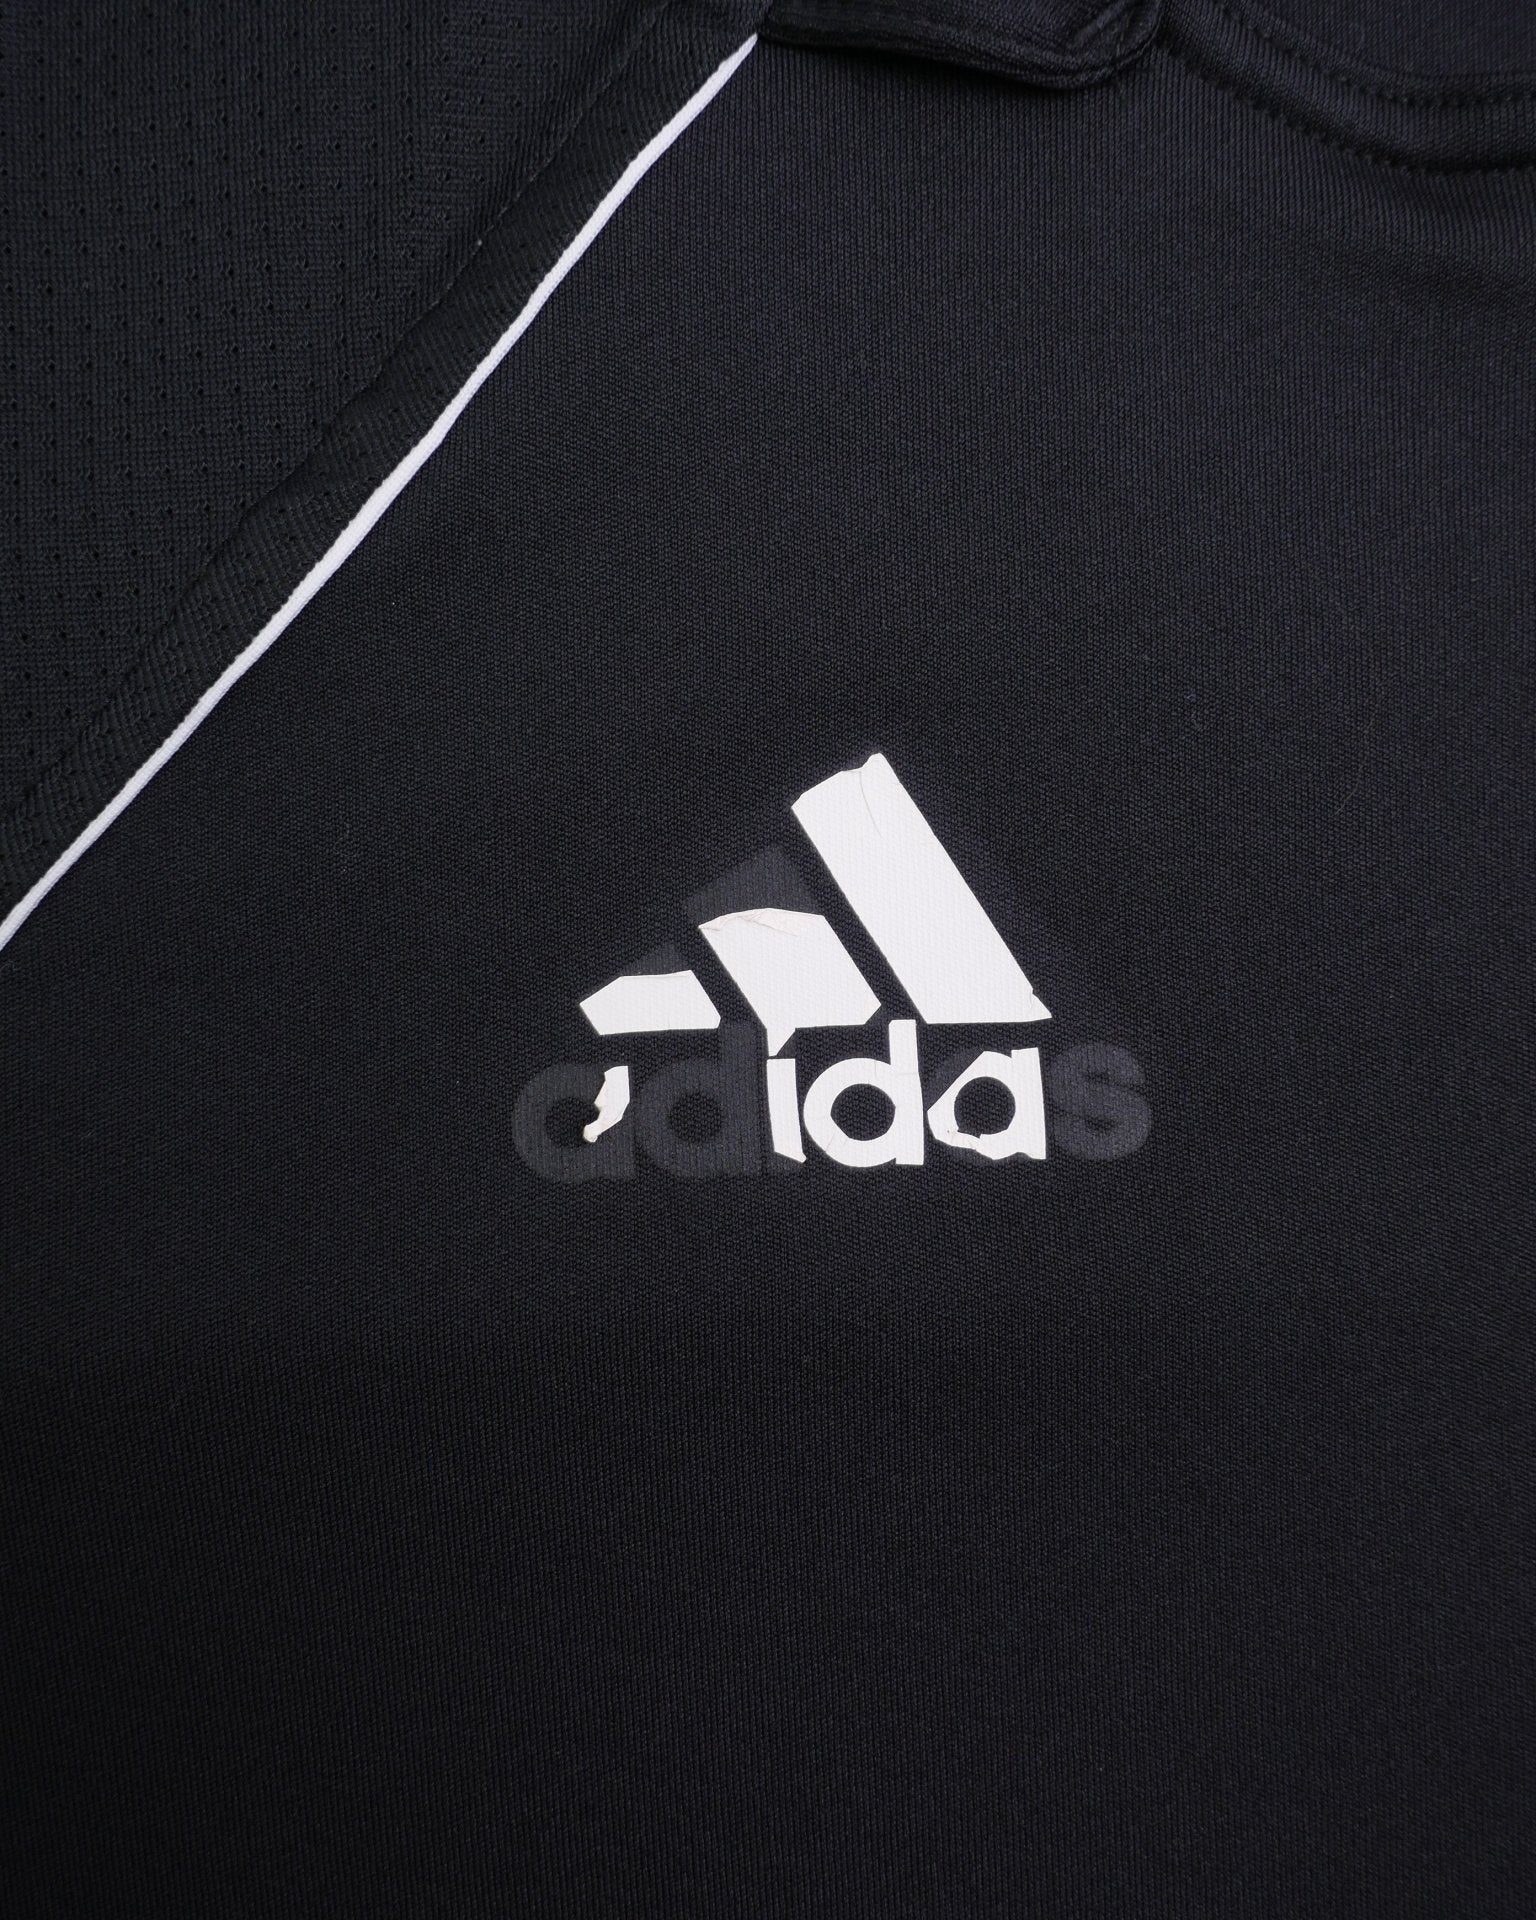 adidas printed Logo black DFB Soccer Jersey Shirt - Peeces